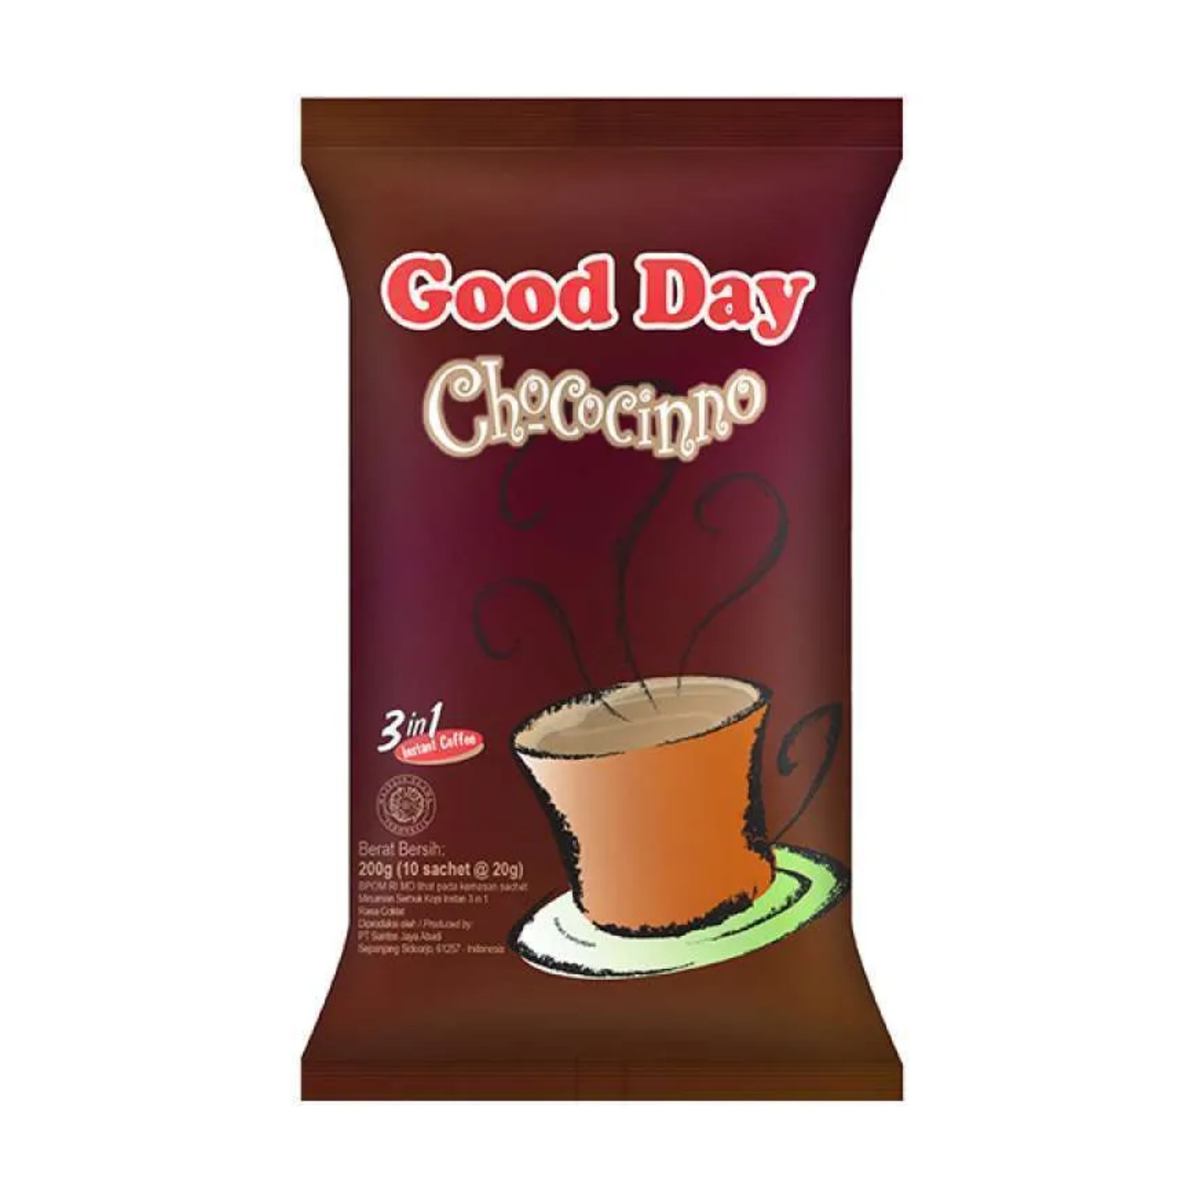 Good Day Chococinno 10s 20g